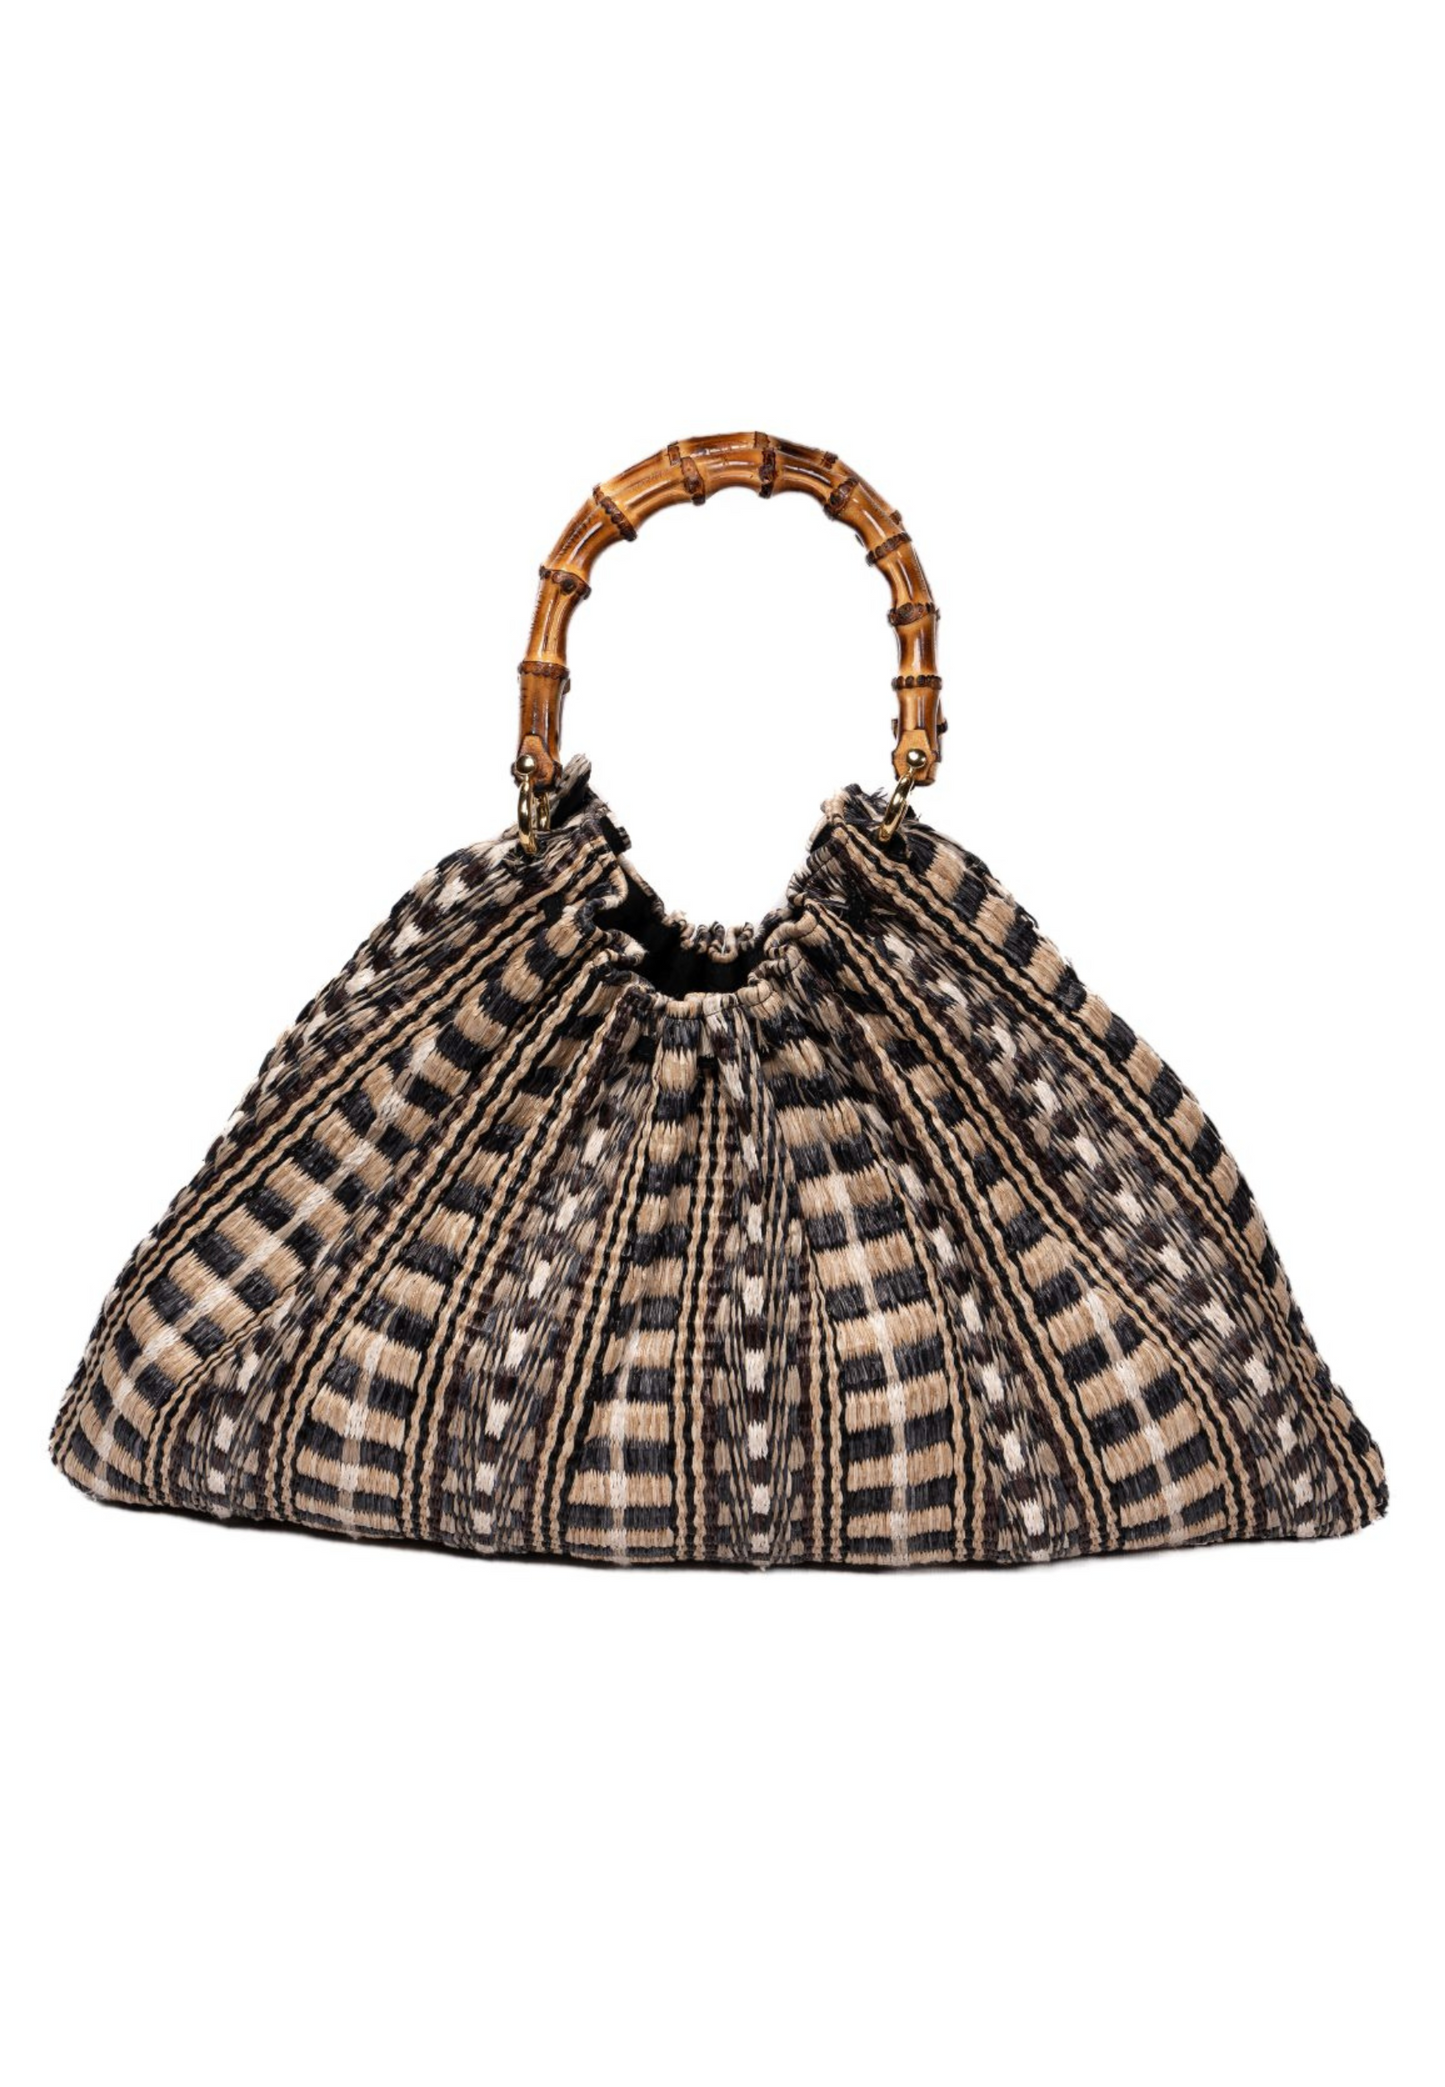 Italian raffia bag with bamboo handles, statement piece with Aztec print, large black raffia bag, Italian design fashion statement, intricate patterned handbag